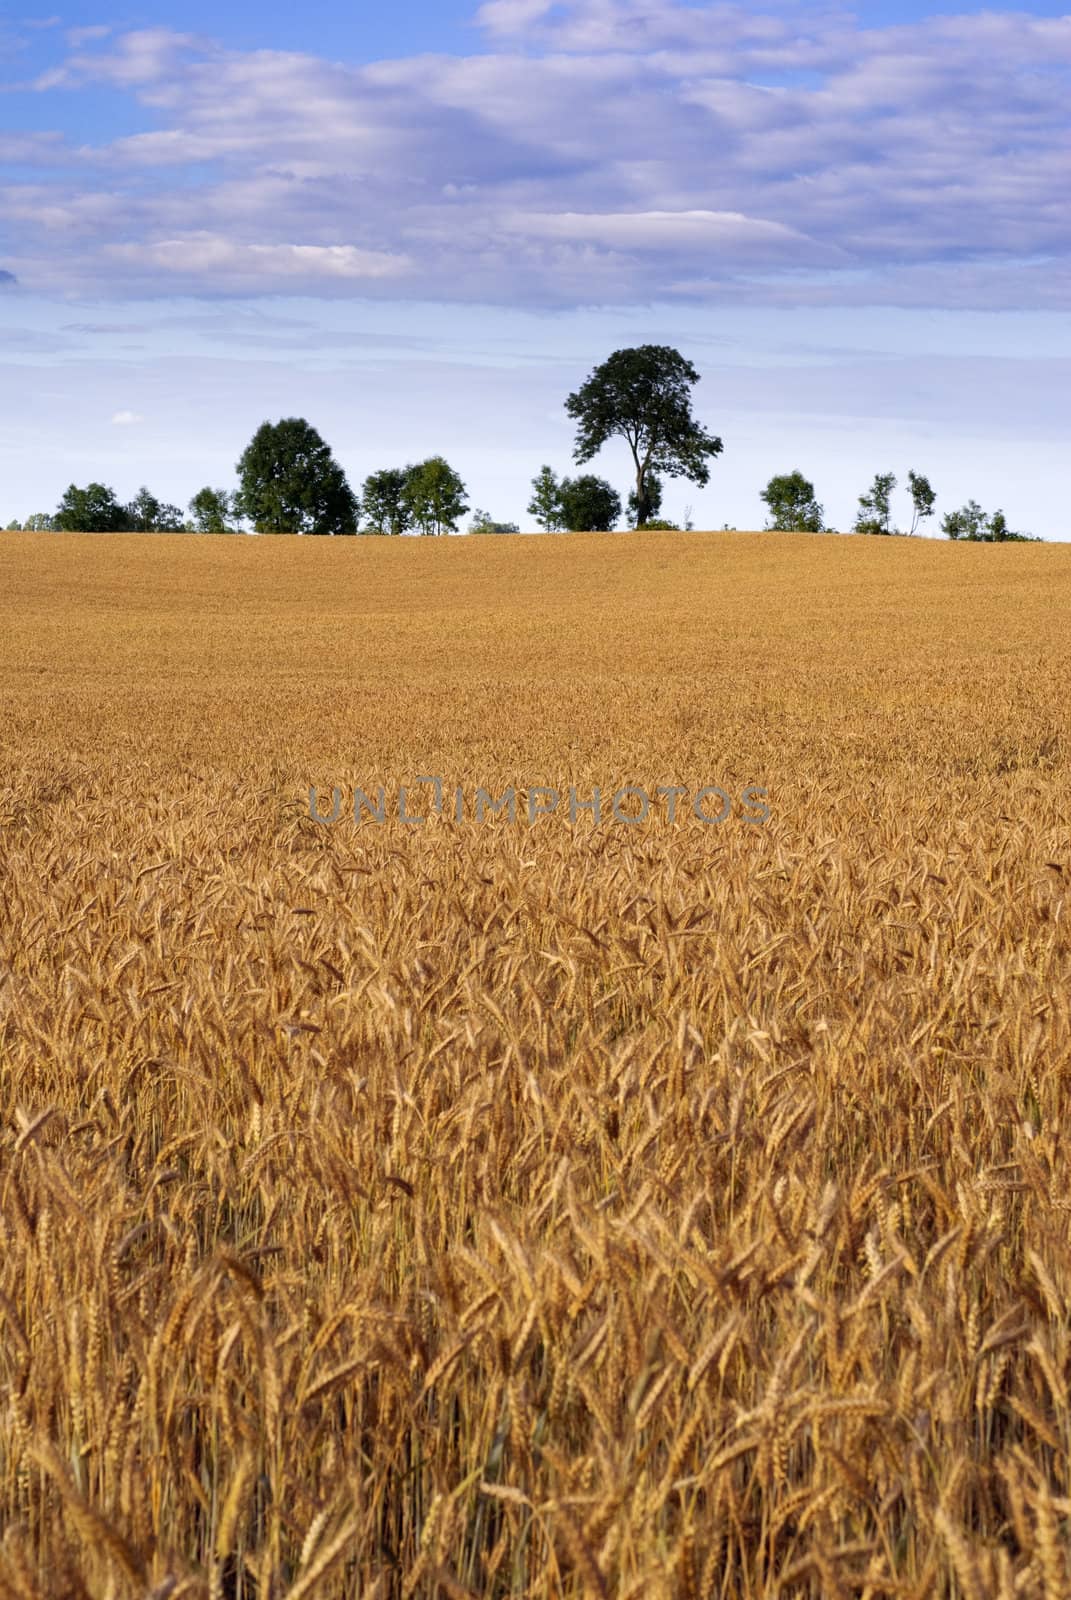 Farm field - triticale cultivation (hybrid of wheat and rye). Europe, Poland. Adobe RGB.